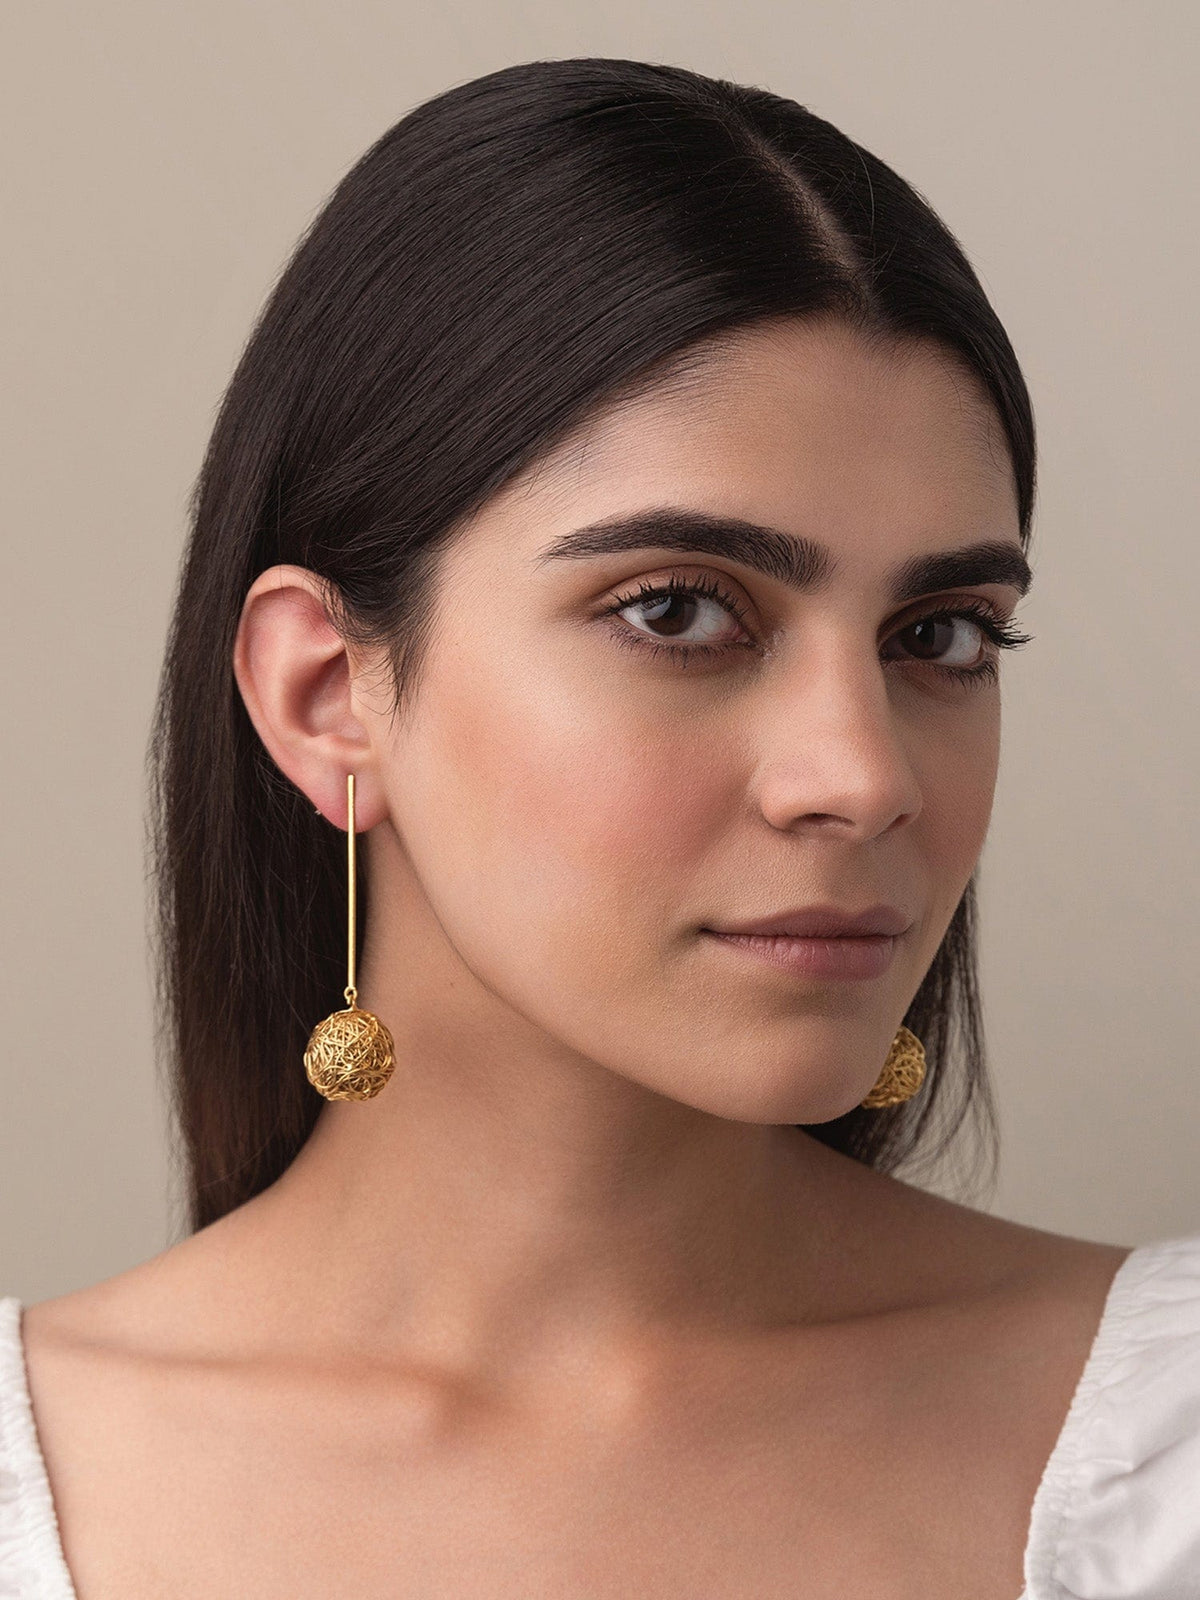 Handcrafted bauble earrings